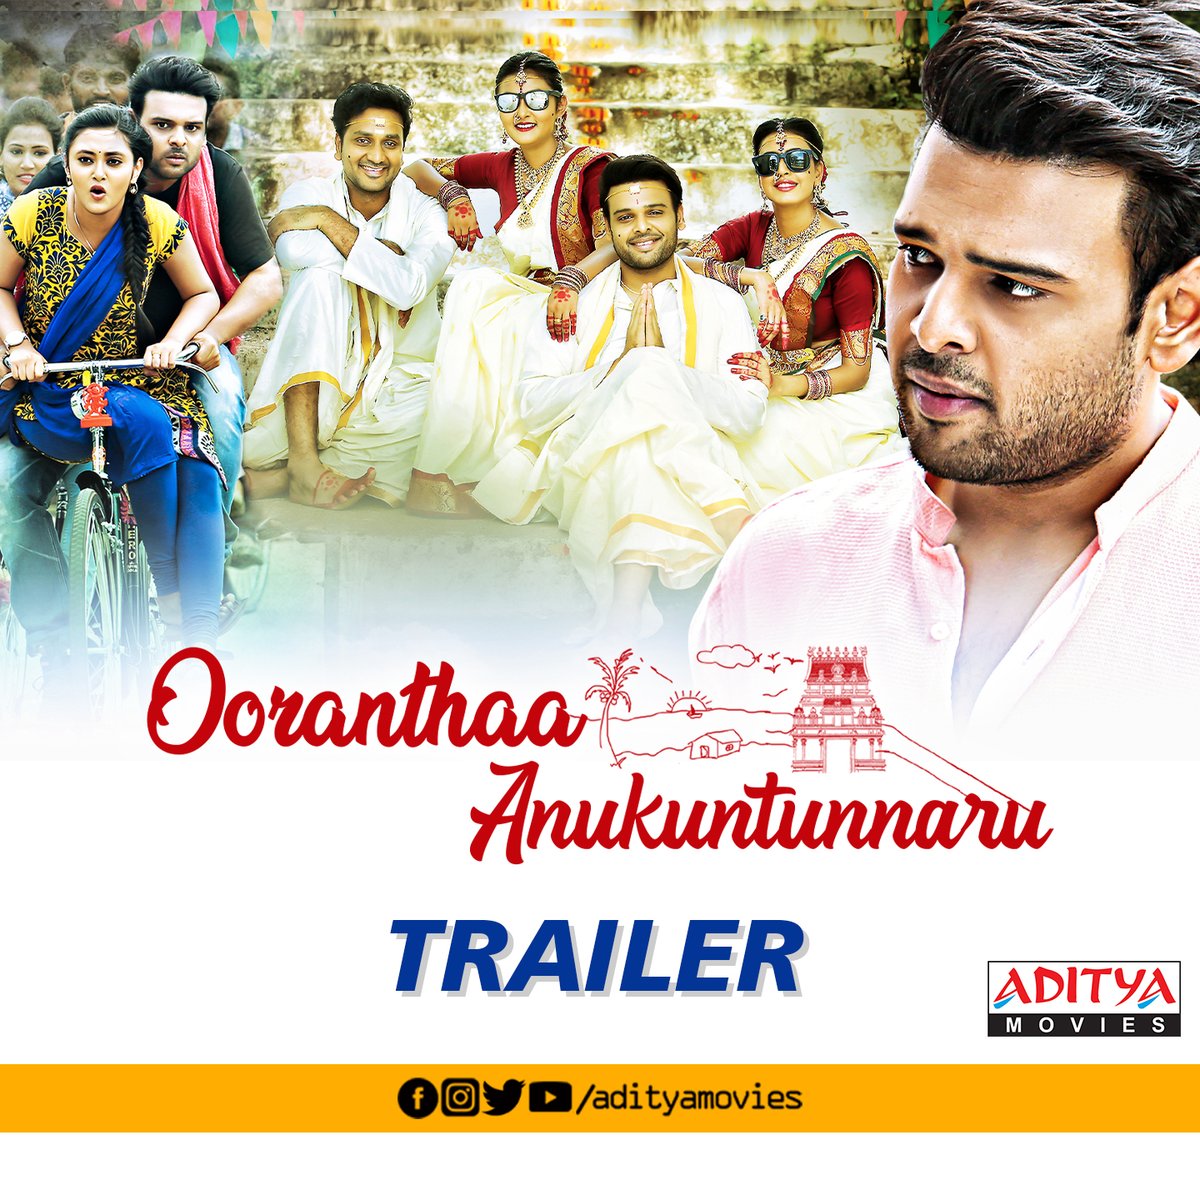 A Complete Drama Family Entertainment
#OoranthaAnukuntunnaru Hindi Movie Trailer Out Now
▶️ youtube.com/watch?v=S-RsyC…

#NaveenVijaykrishna #MeghaChaudhary #SophiyaSingh #SrinivasAvasarala #BalajiSanala #AdityaMovies